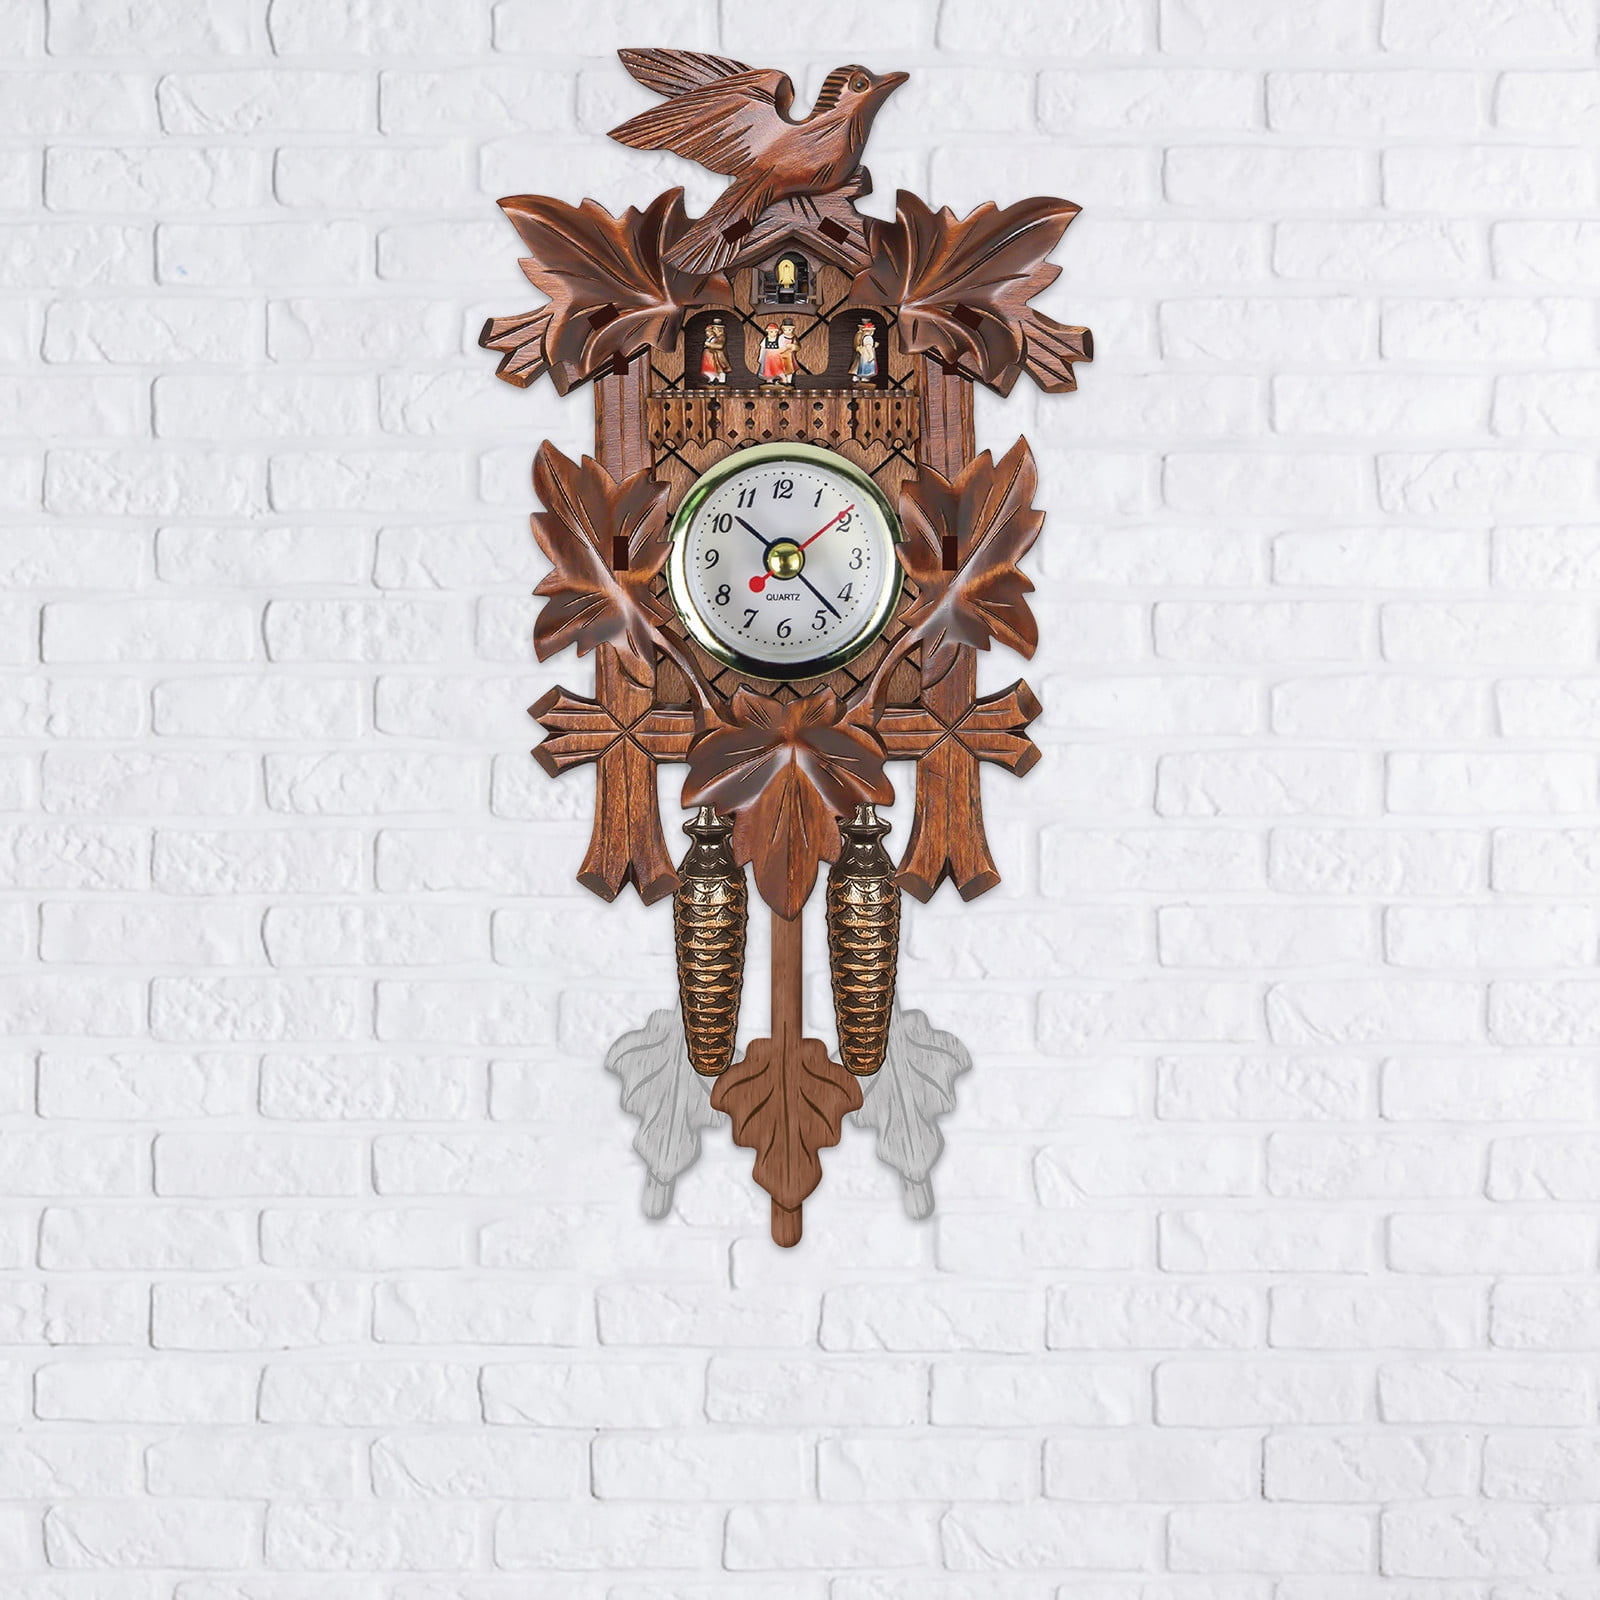 Chiming Classic Cuckoo Wall Clock Hanging Bird Clock Home Decor Christmas Gifts 